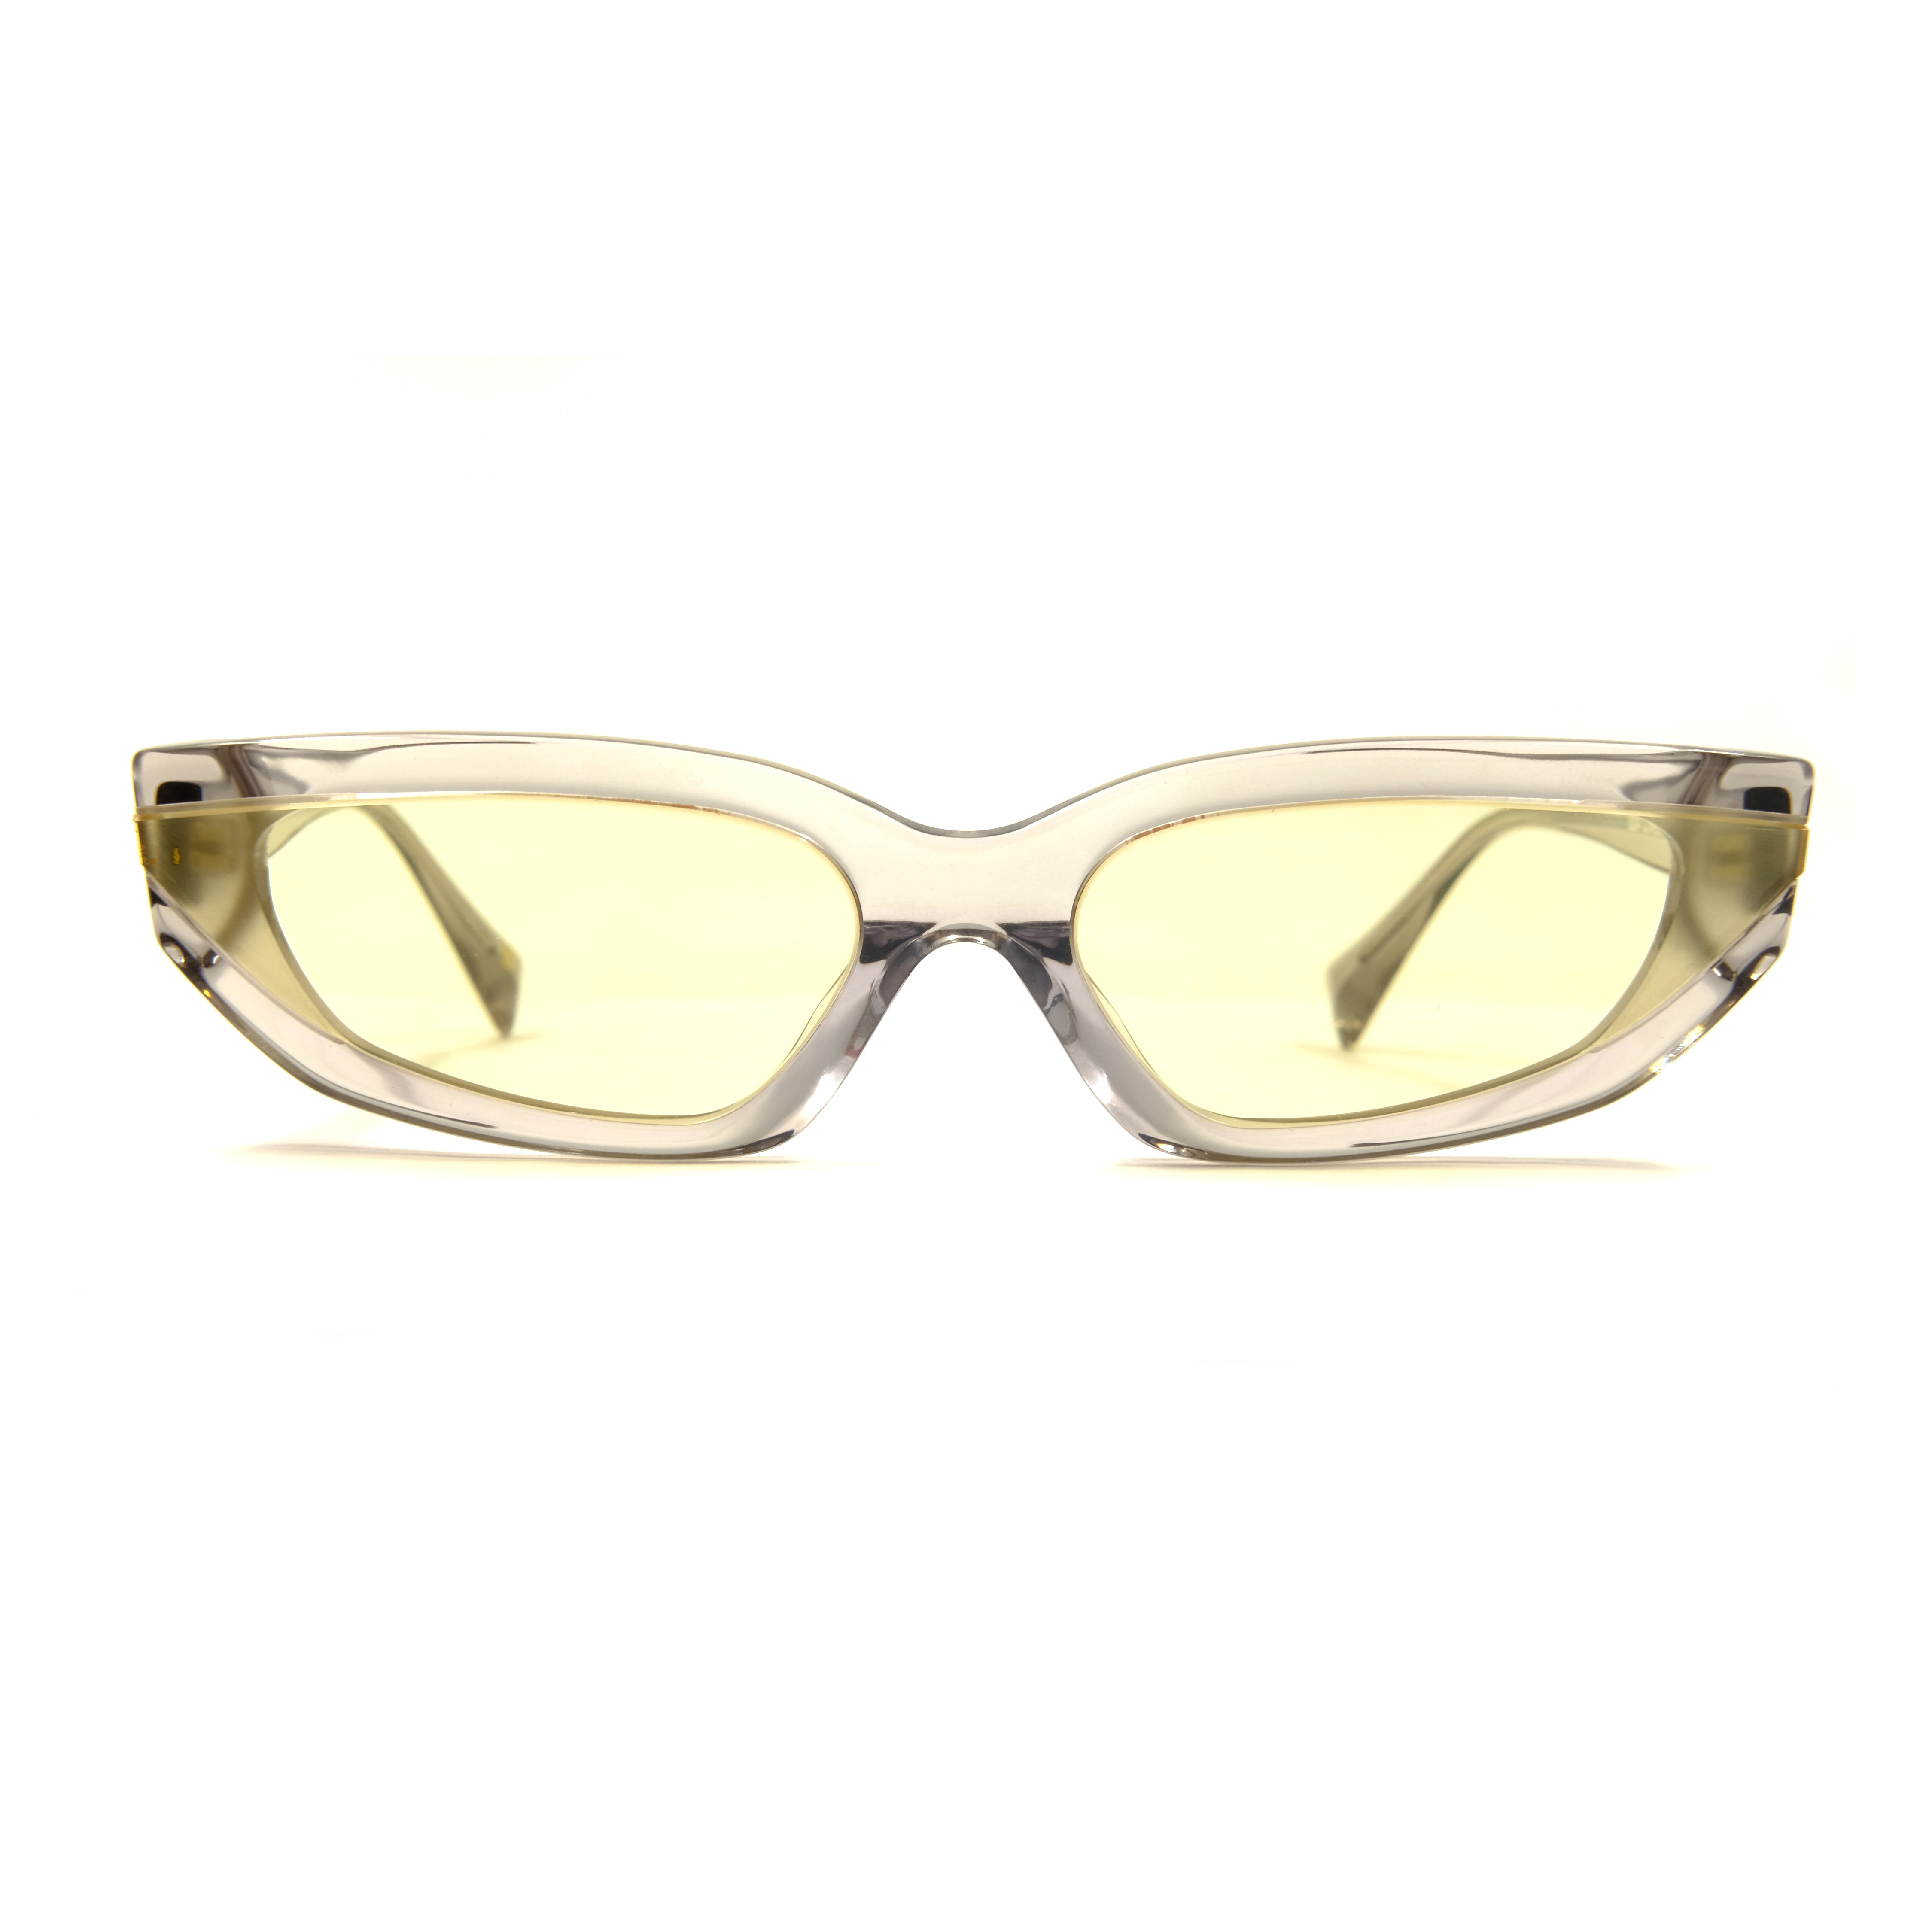 Custom Oversize Shades Women Sunglasses Bespoke Eyeglasses Frame Manufacturers